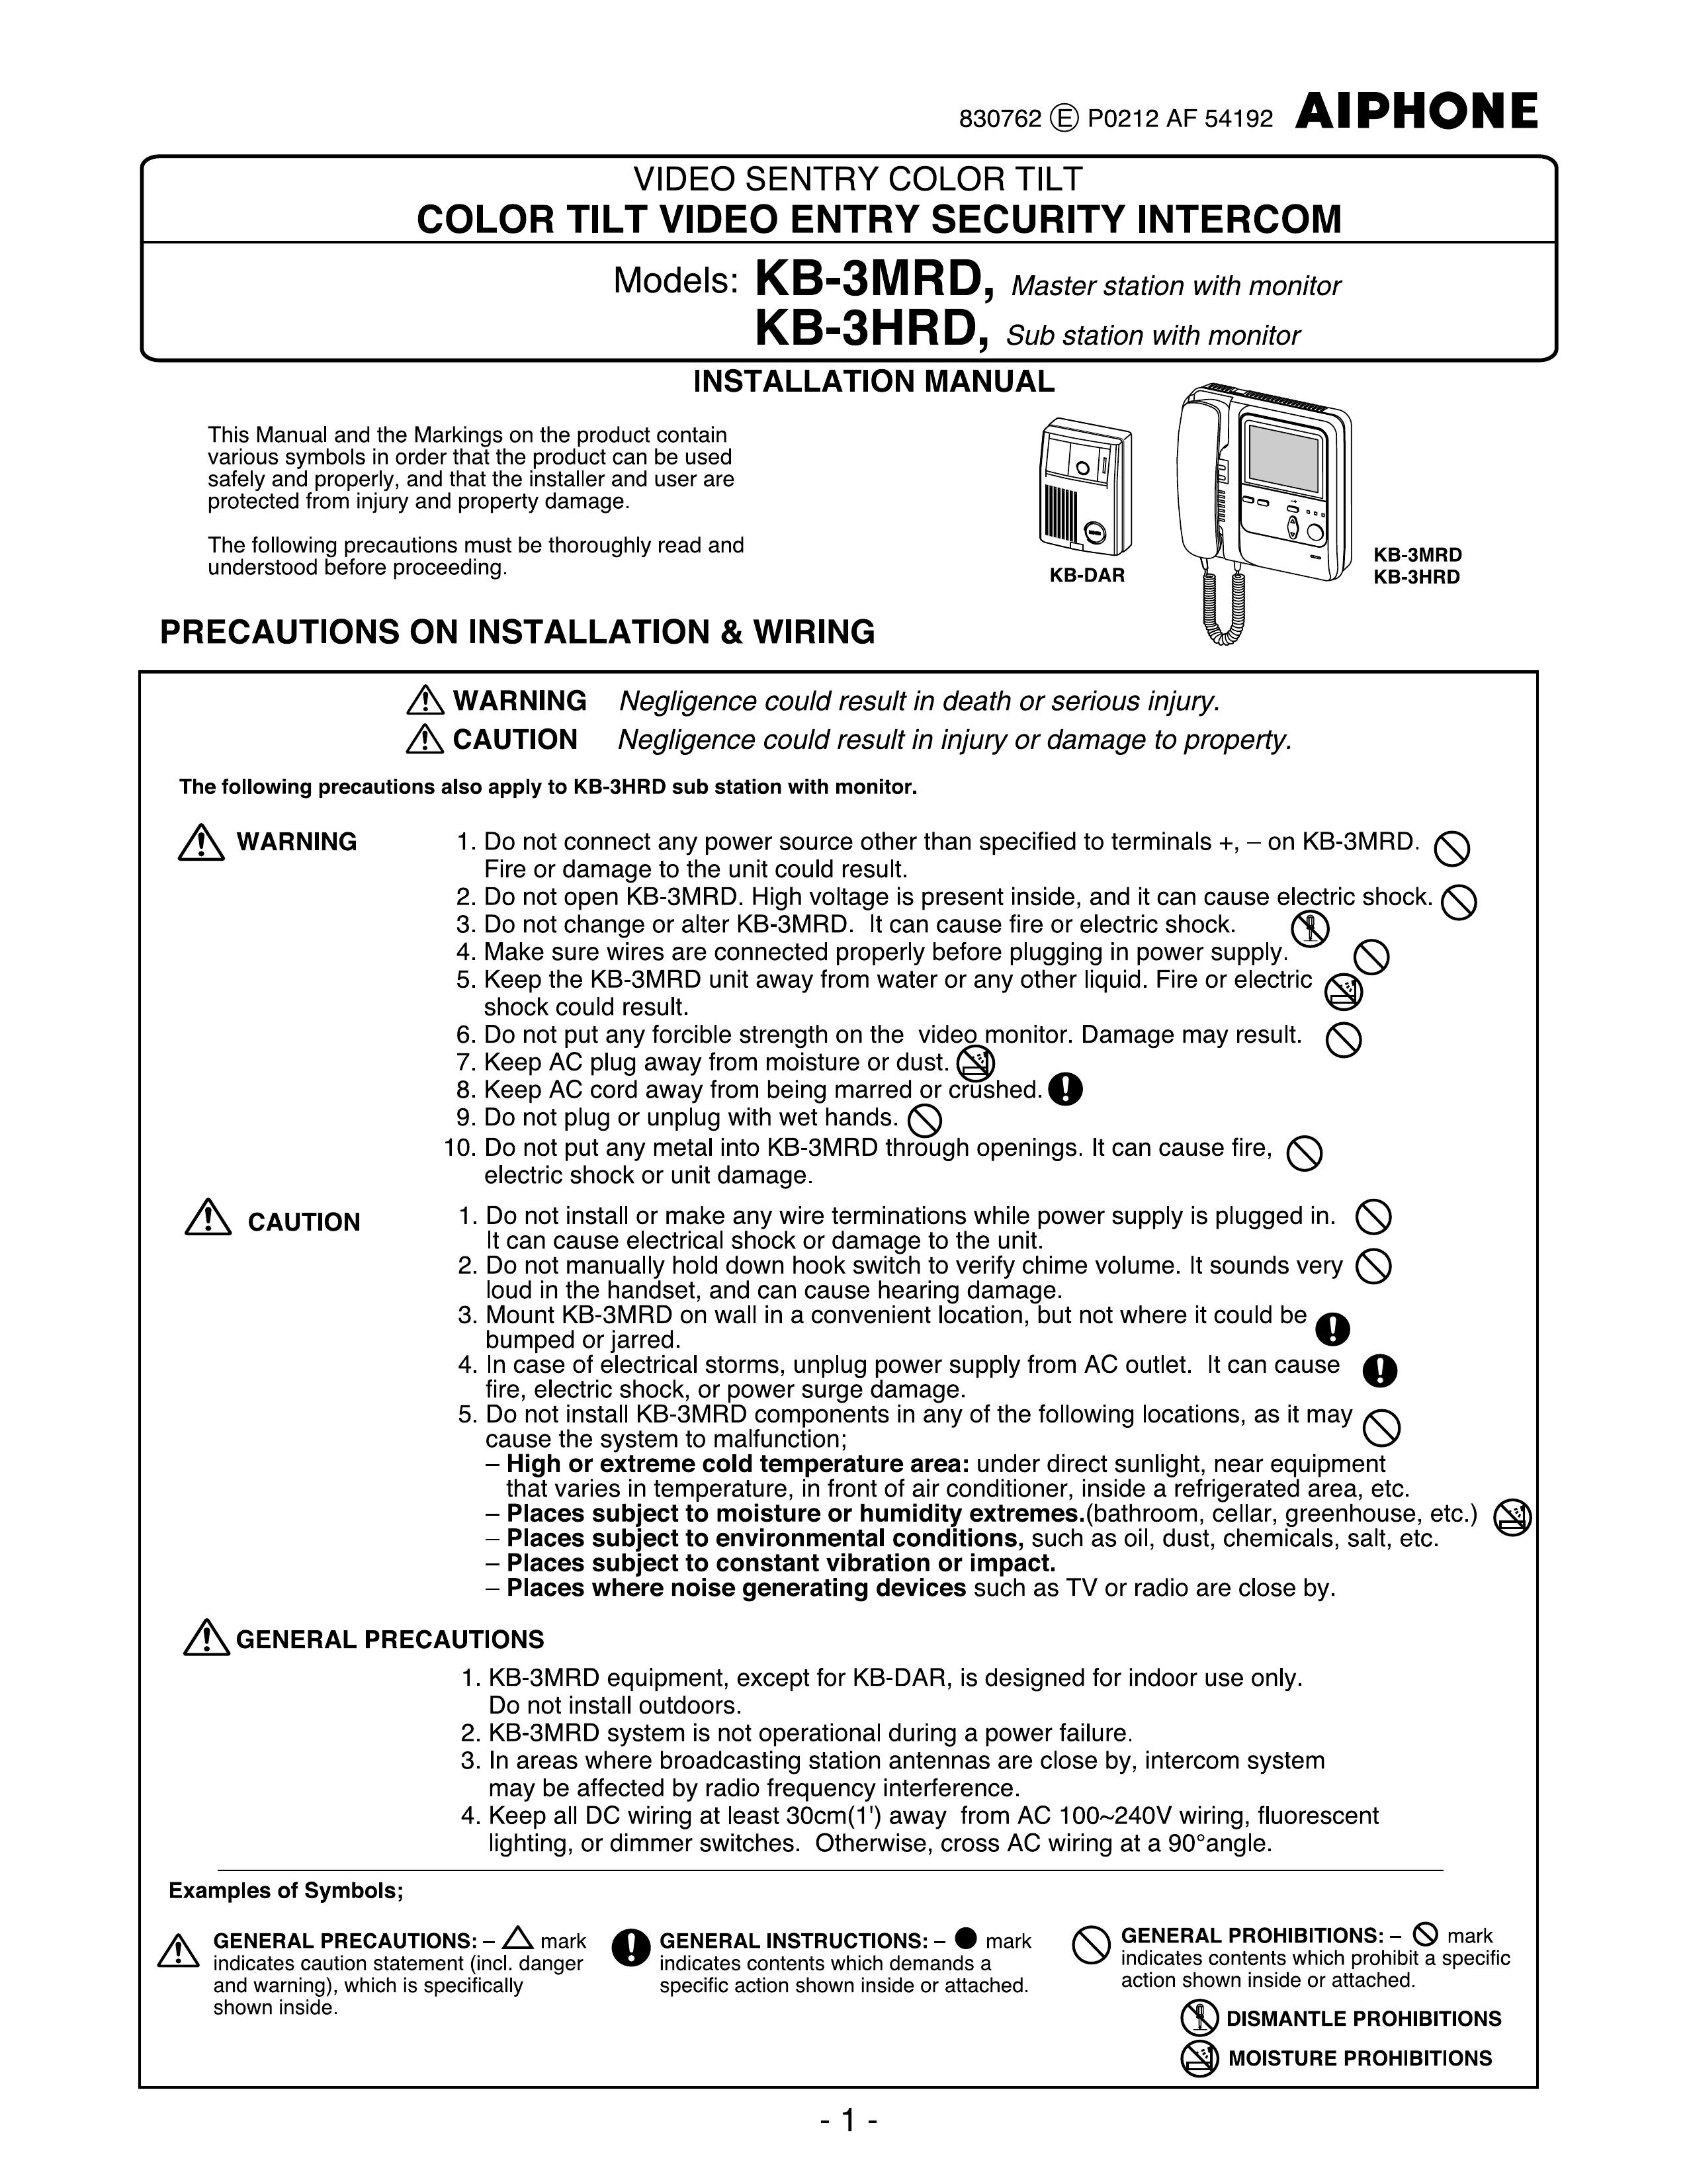 Aiphone KB-3MRD Security Camera User Manual